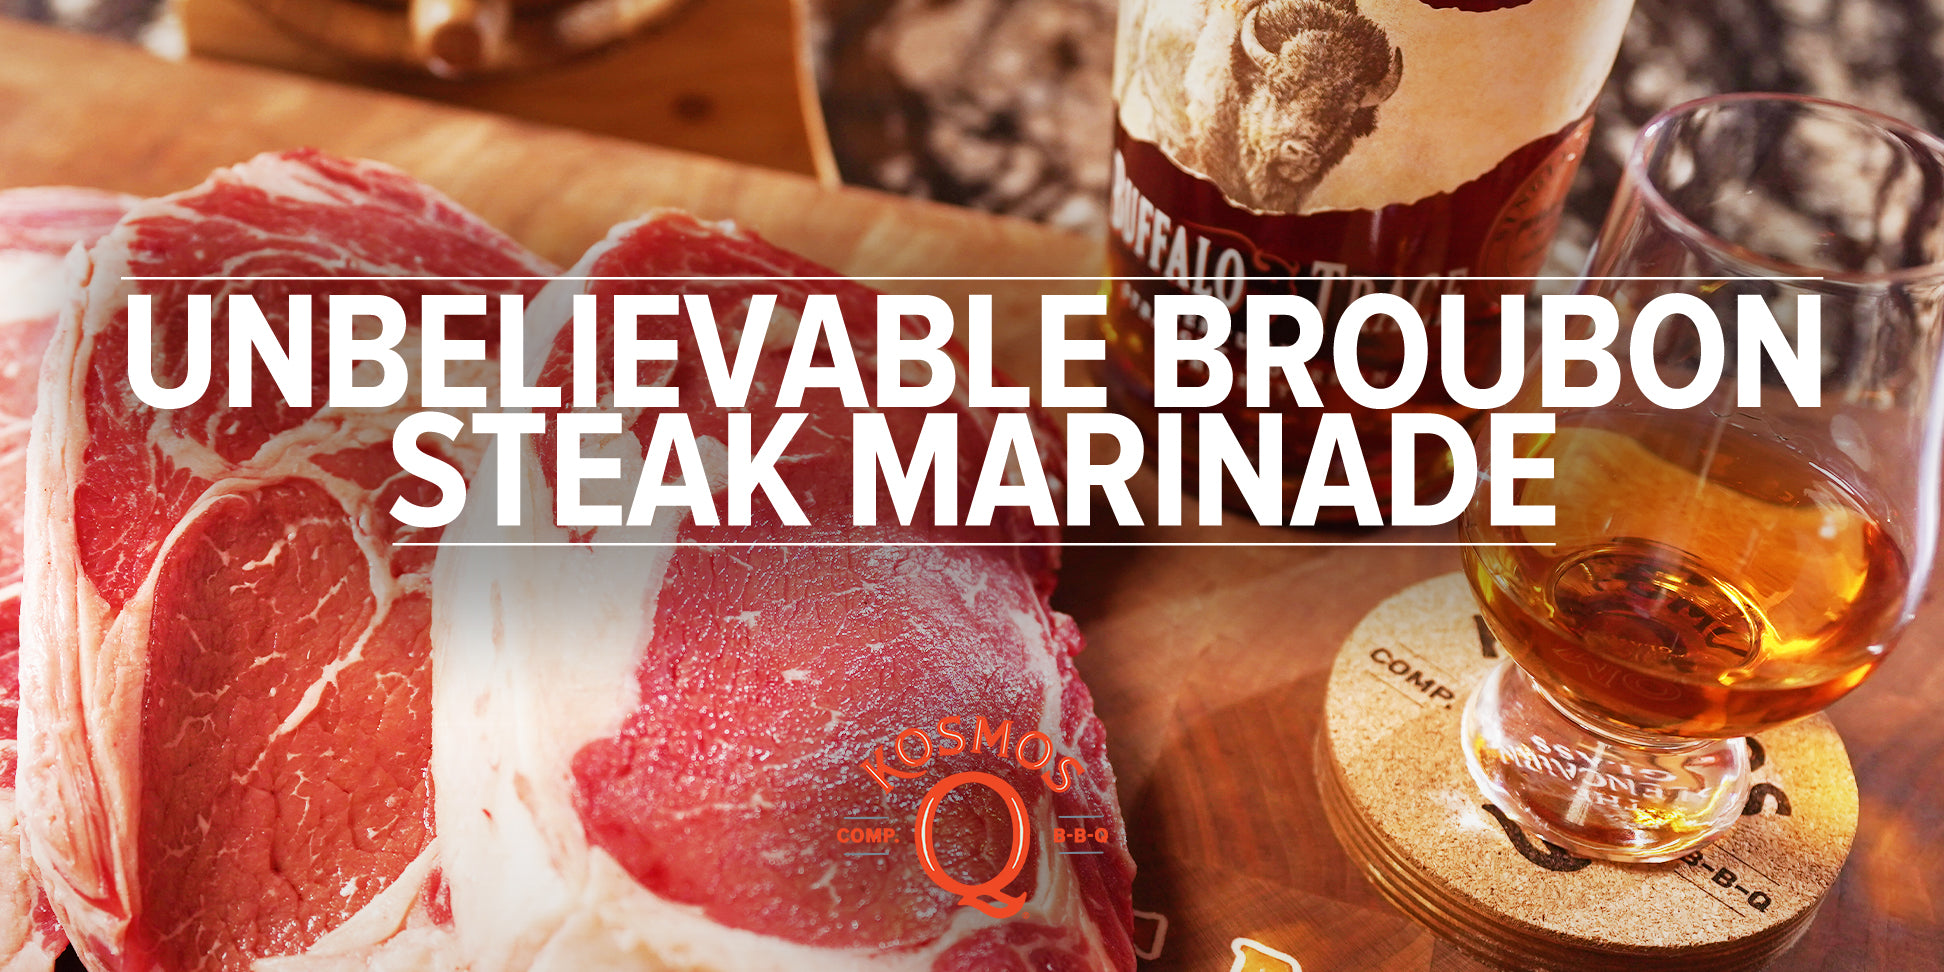 UNBELIEVABLE Bourbon Steak Marinade!